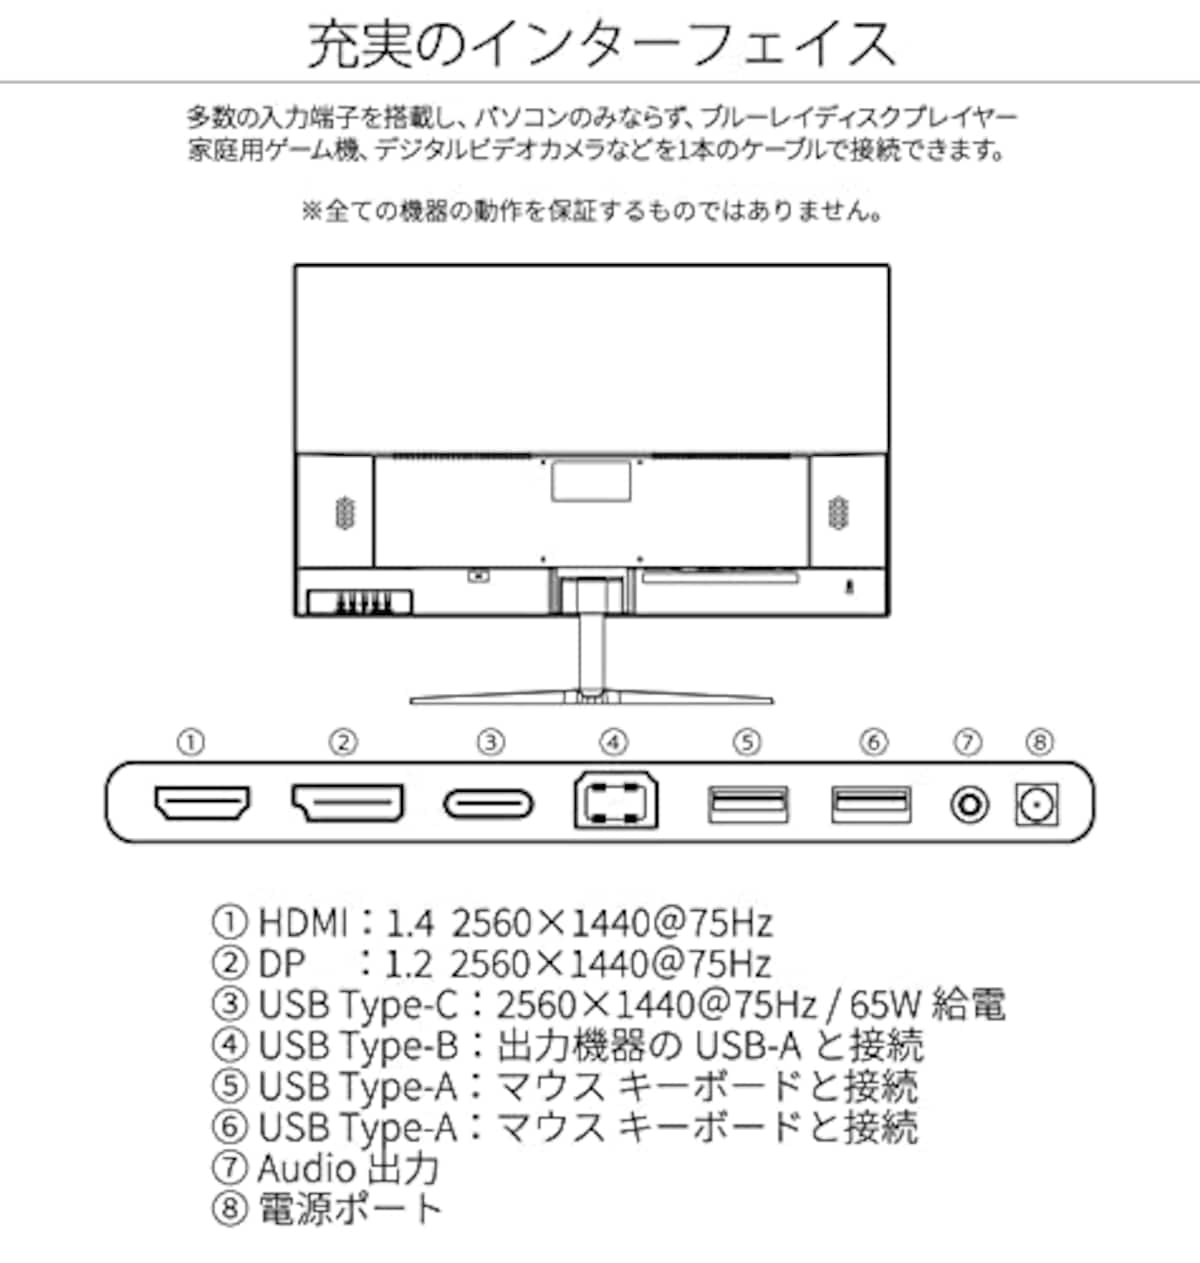  JAPANNEXT IPSパネル搭載27インチ WQHD解像度USB-C給電対応液晶モニターJN-IPS27WQHDR-C65W HDMI DP USB-C(65W給電) KVM機能画像6 